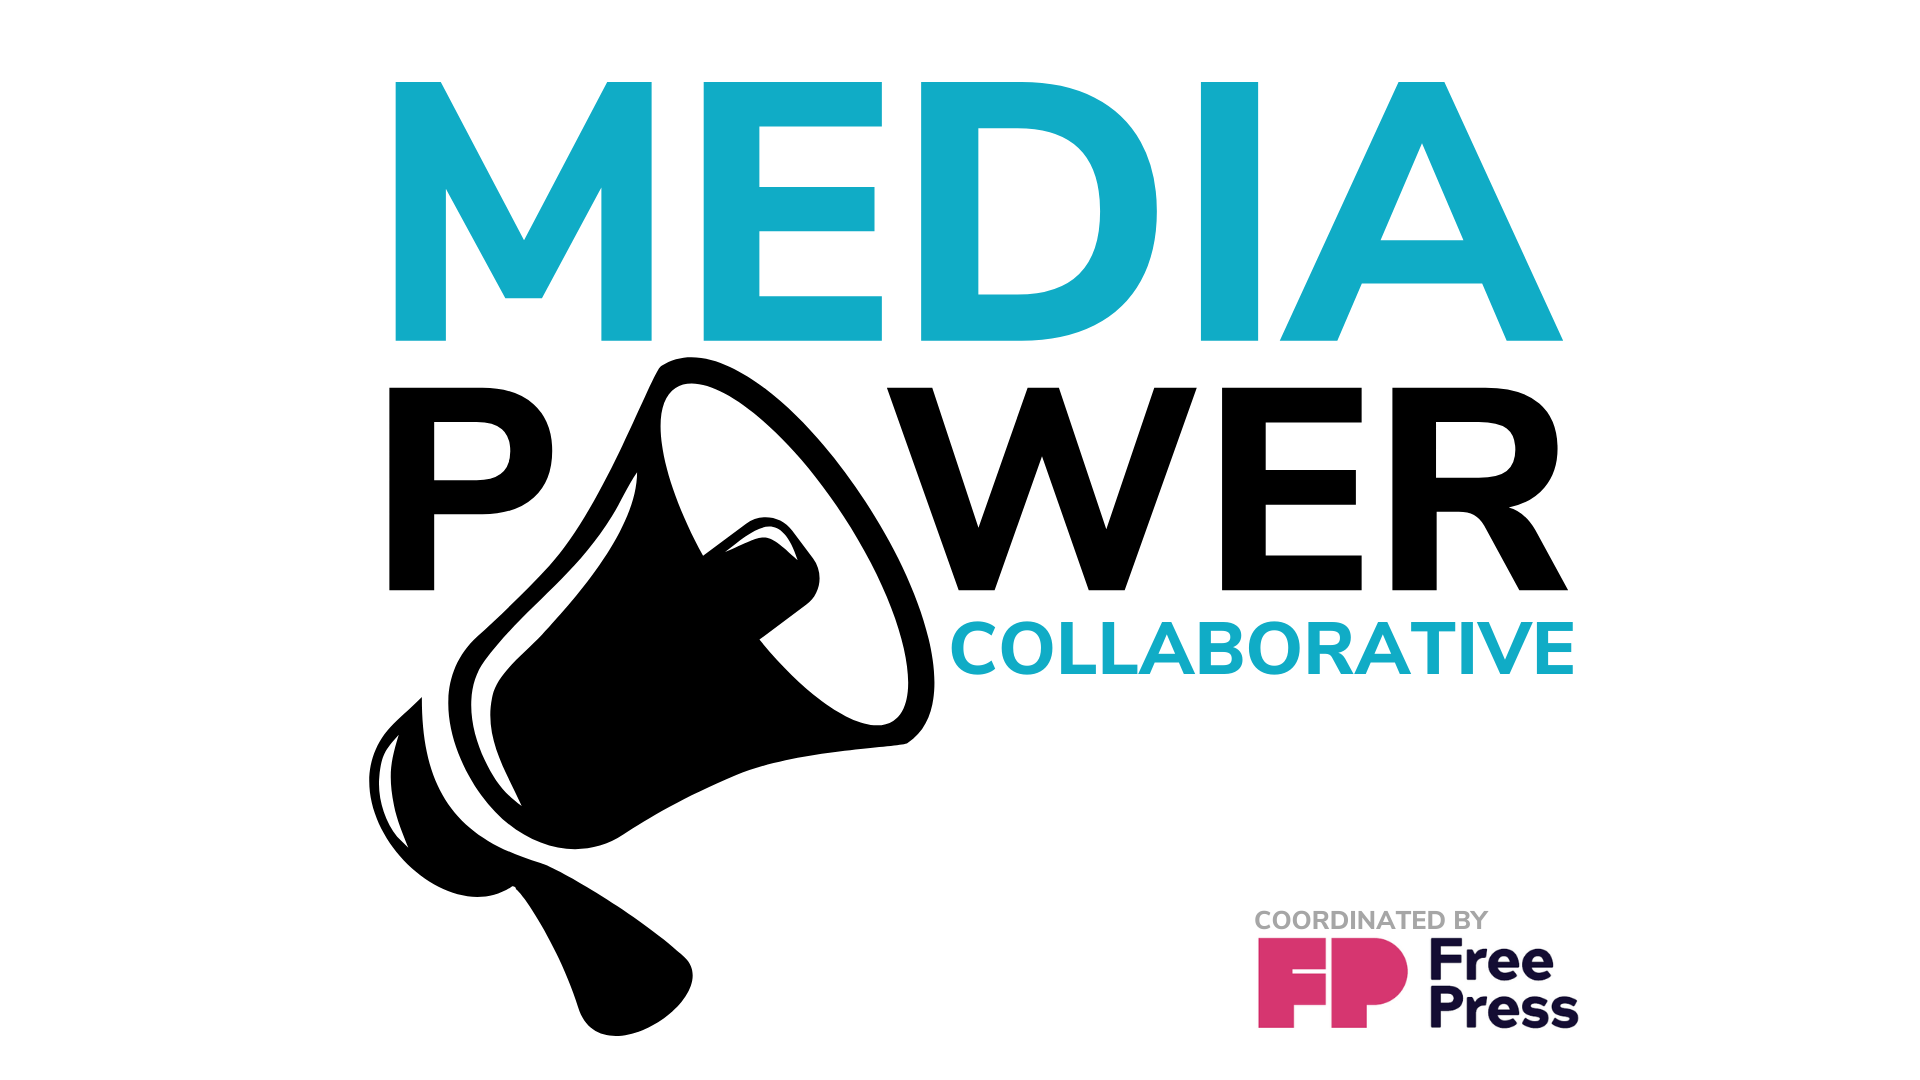 "Media Power Collaborative" next to a megaphone